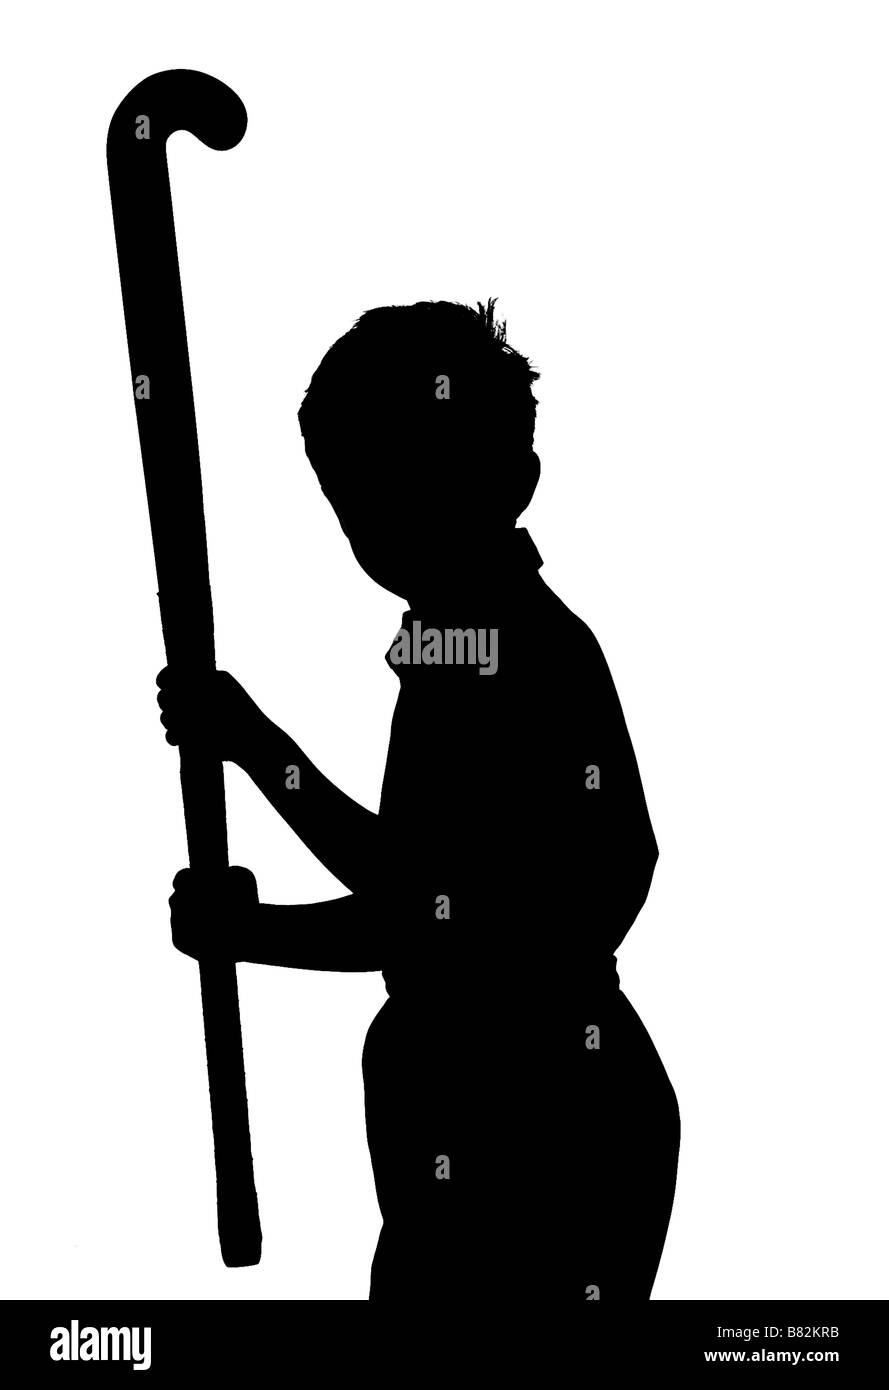 silhouette of boy ho ding a hockey stick Stock Photo